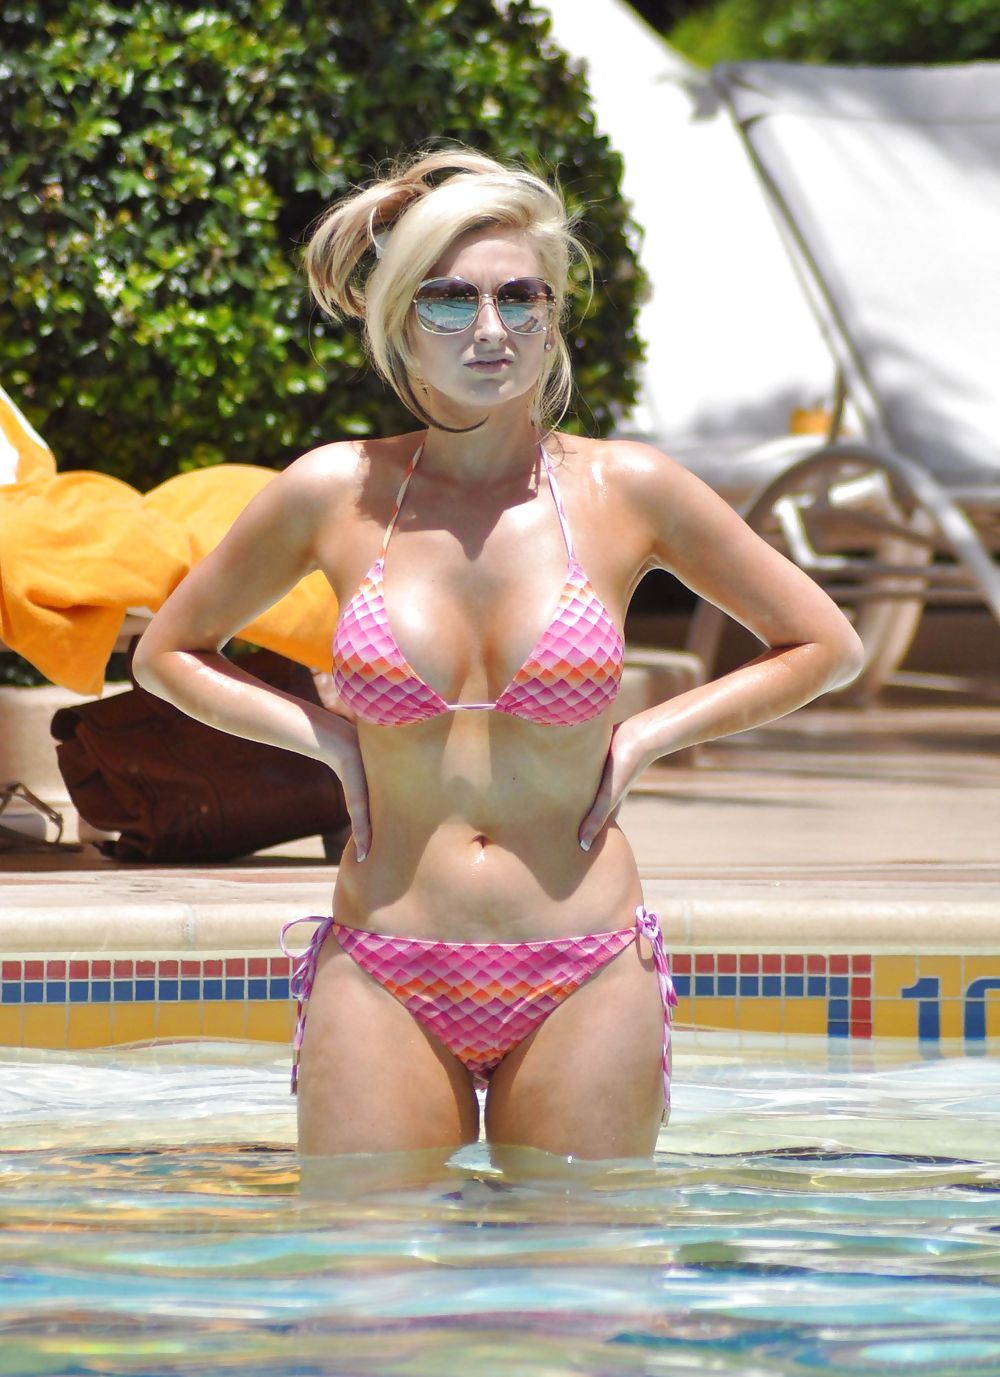 Gemma Merna at the Pool looking pretty nice in a Bikini #3760903